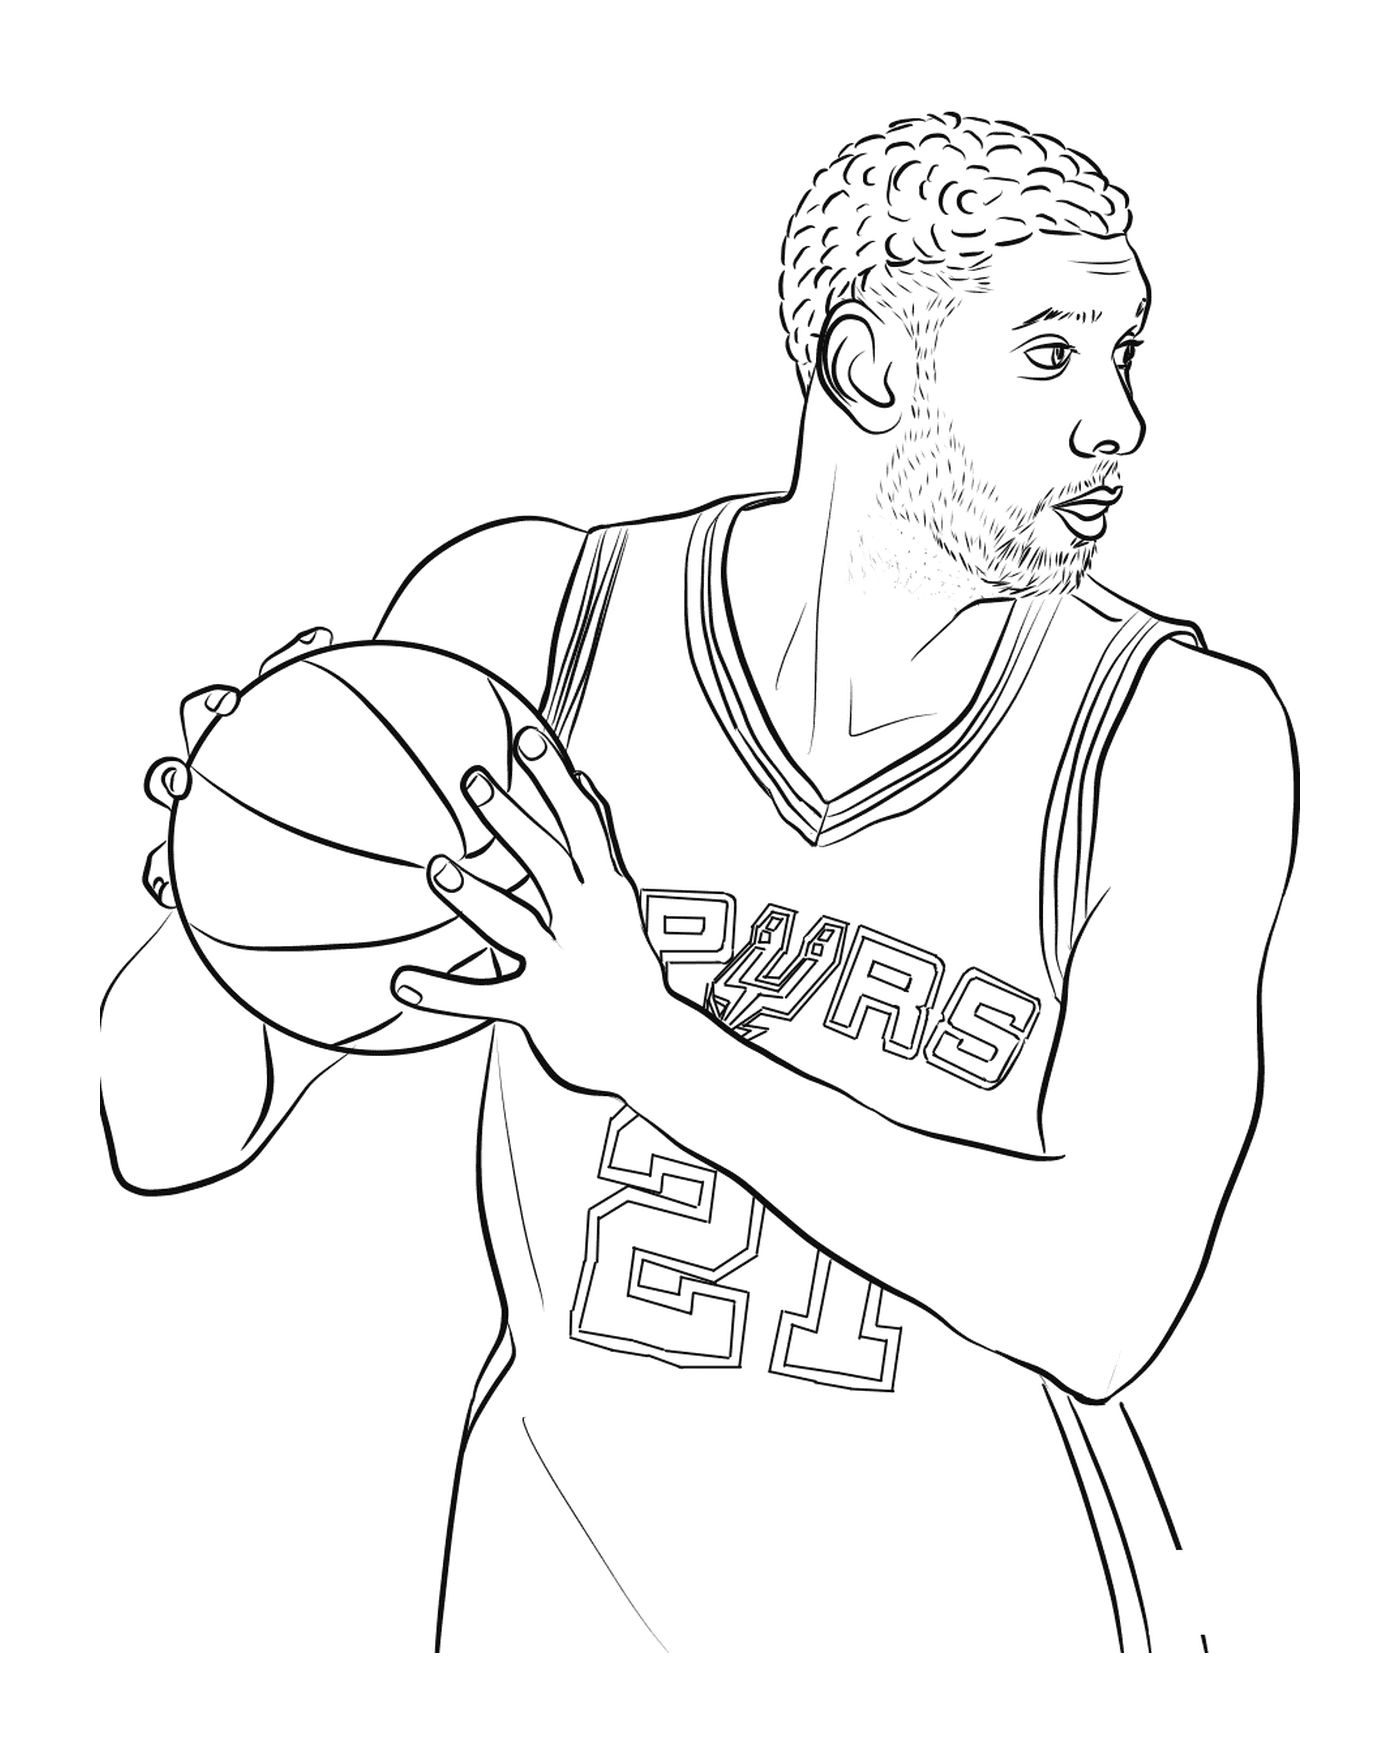  Tim Duncan holds a basketball ball 